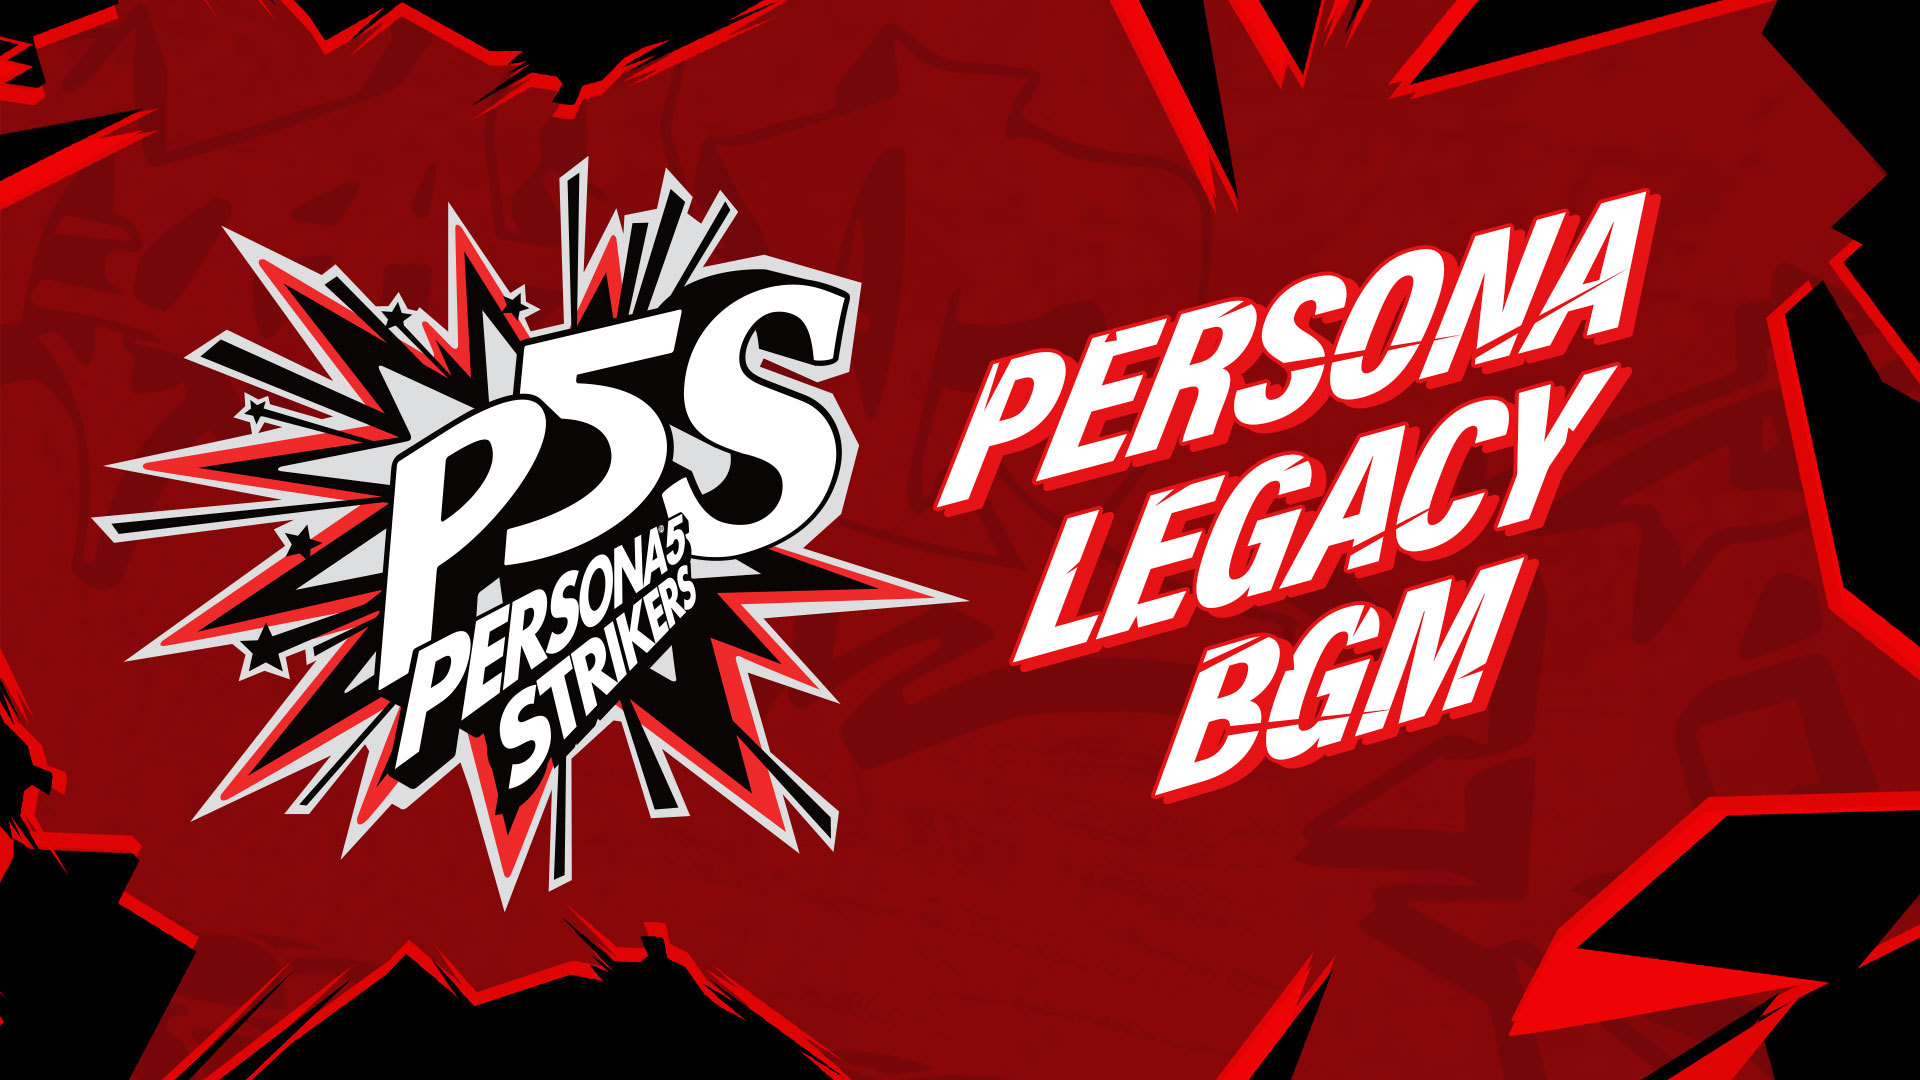 Persona®5 Strikers Persona Legacy BGM